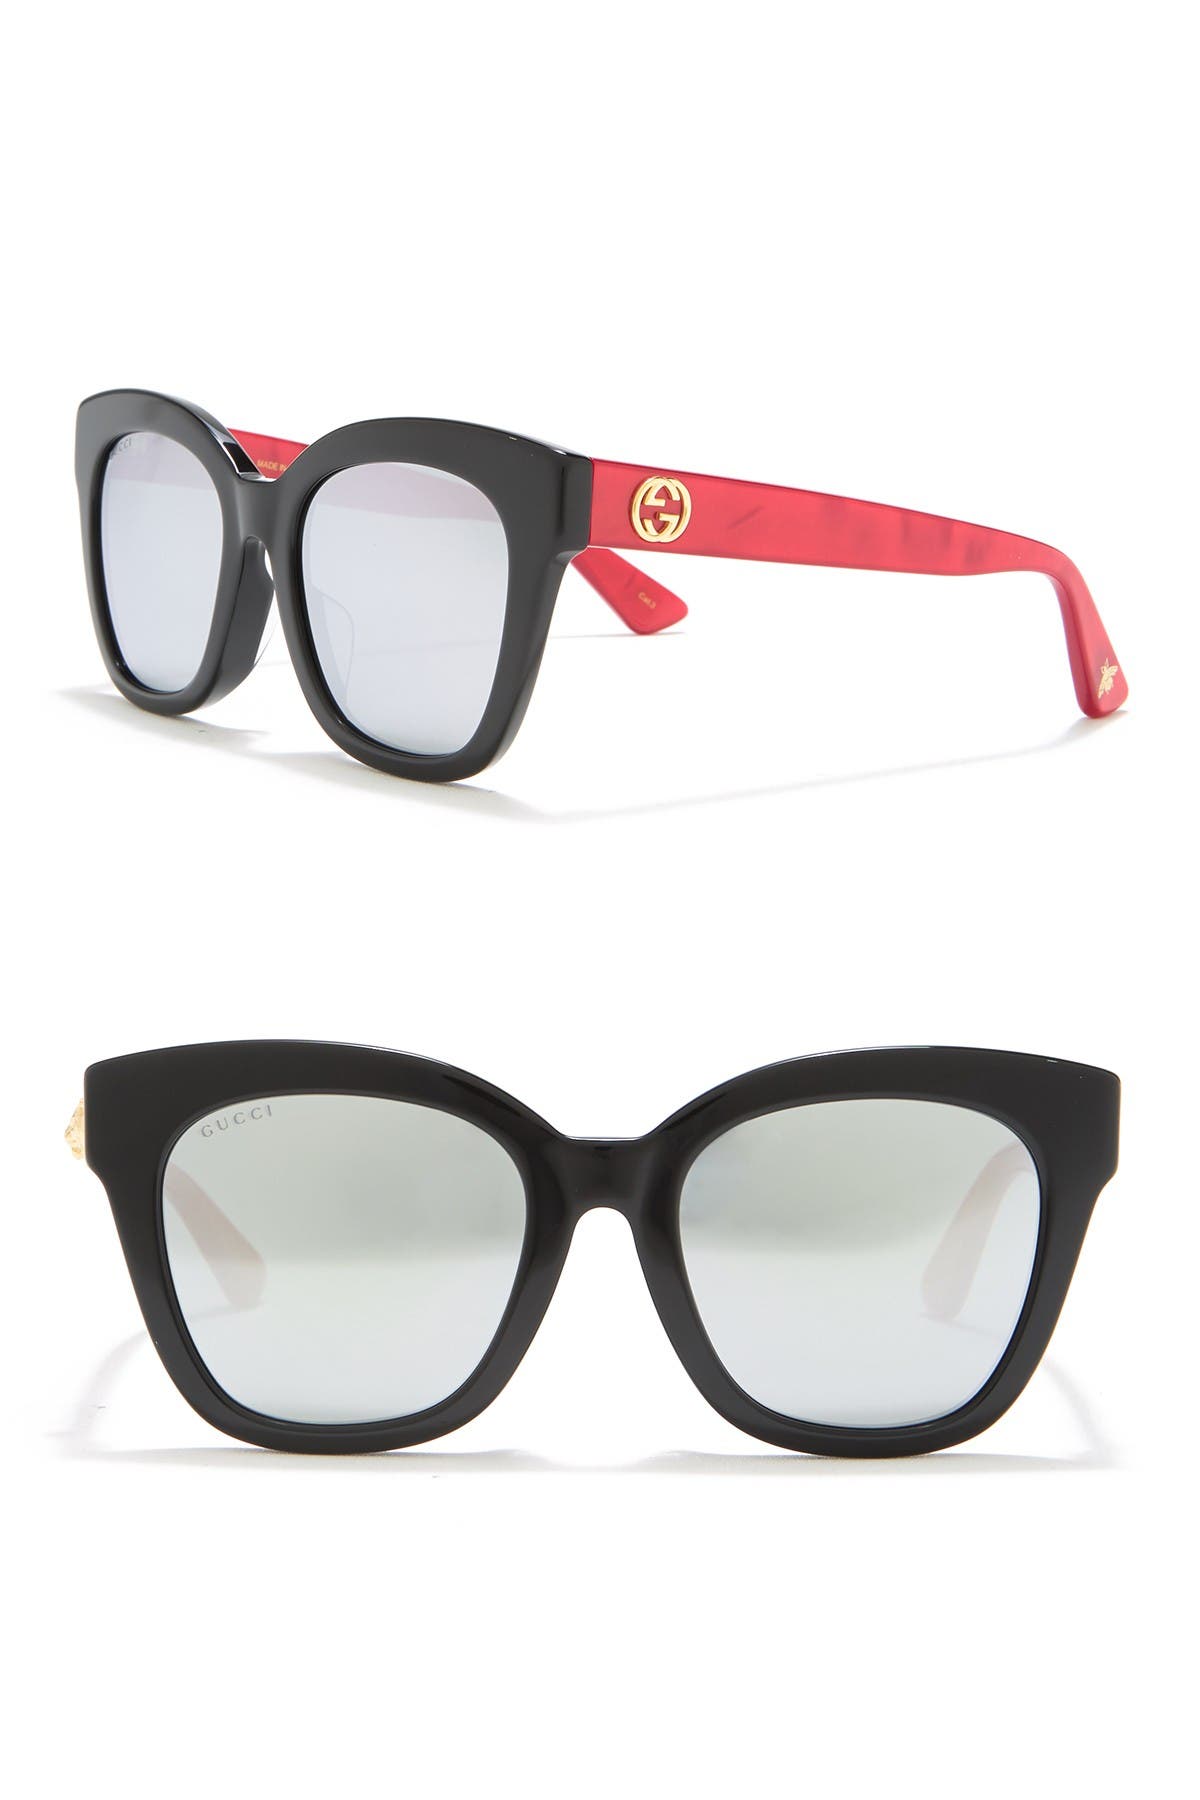 gucci 52mm rectangle sunglasses